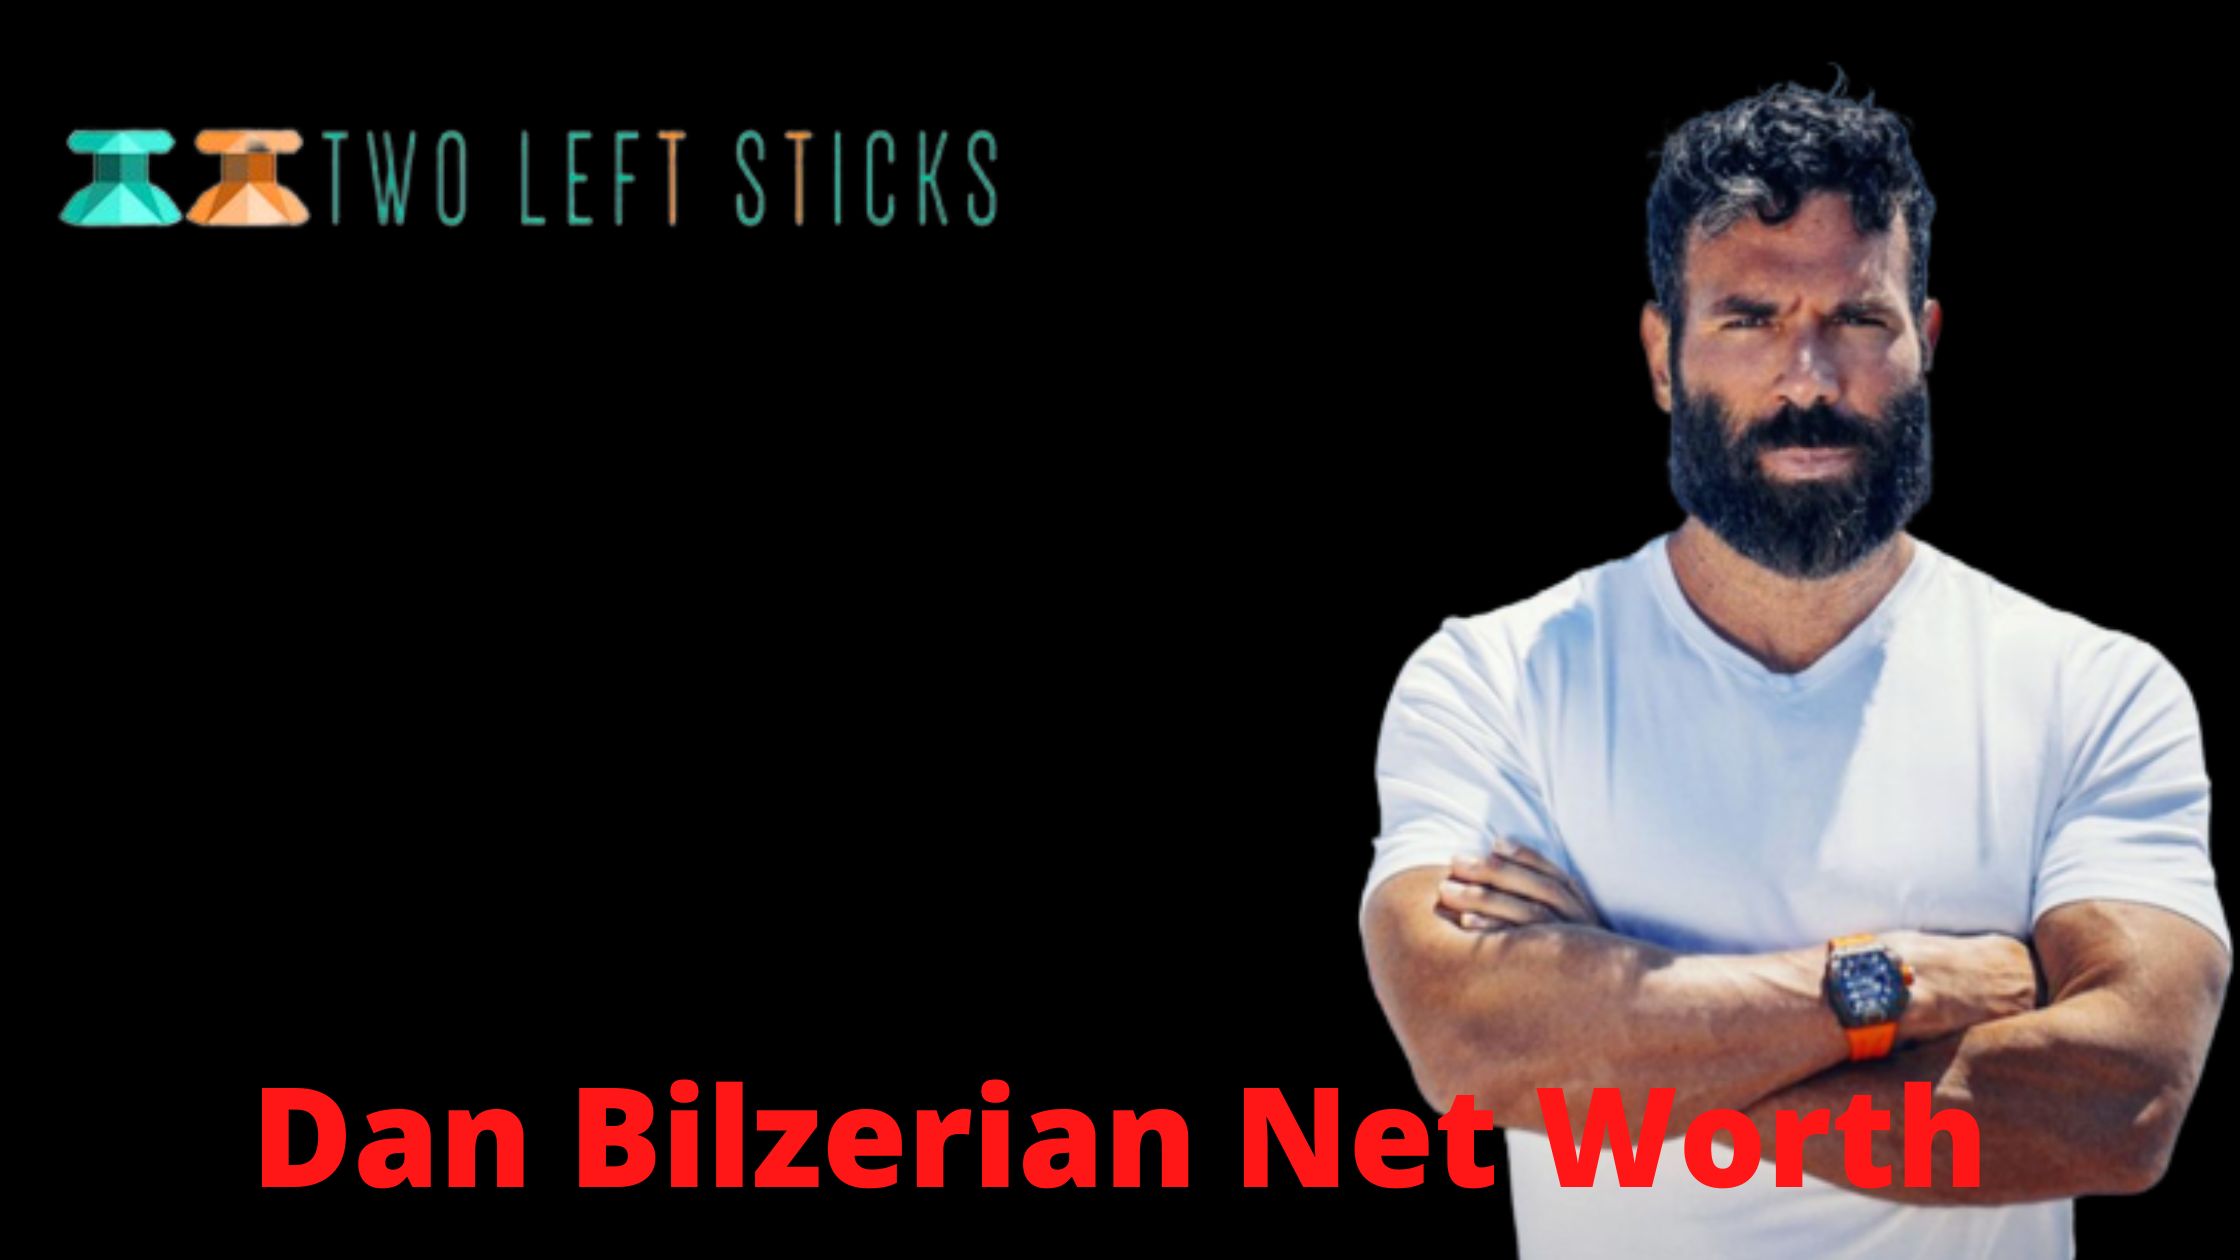 Dan-Bilzerian-net-worth-twoleftsticks(1)